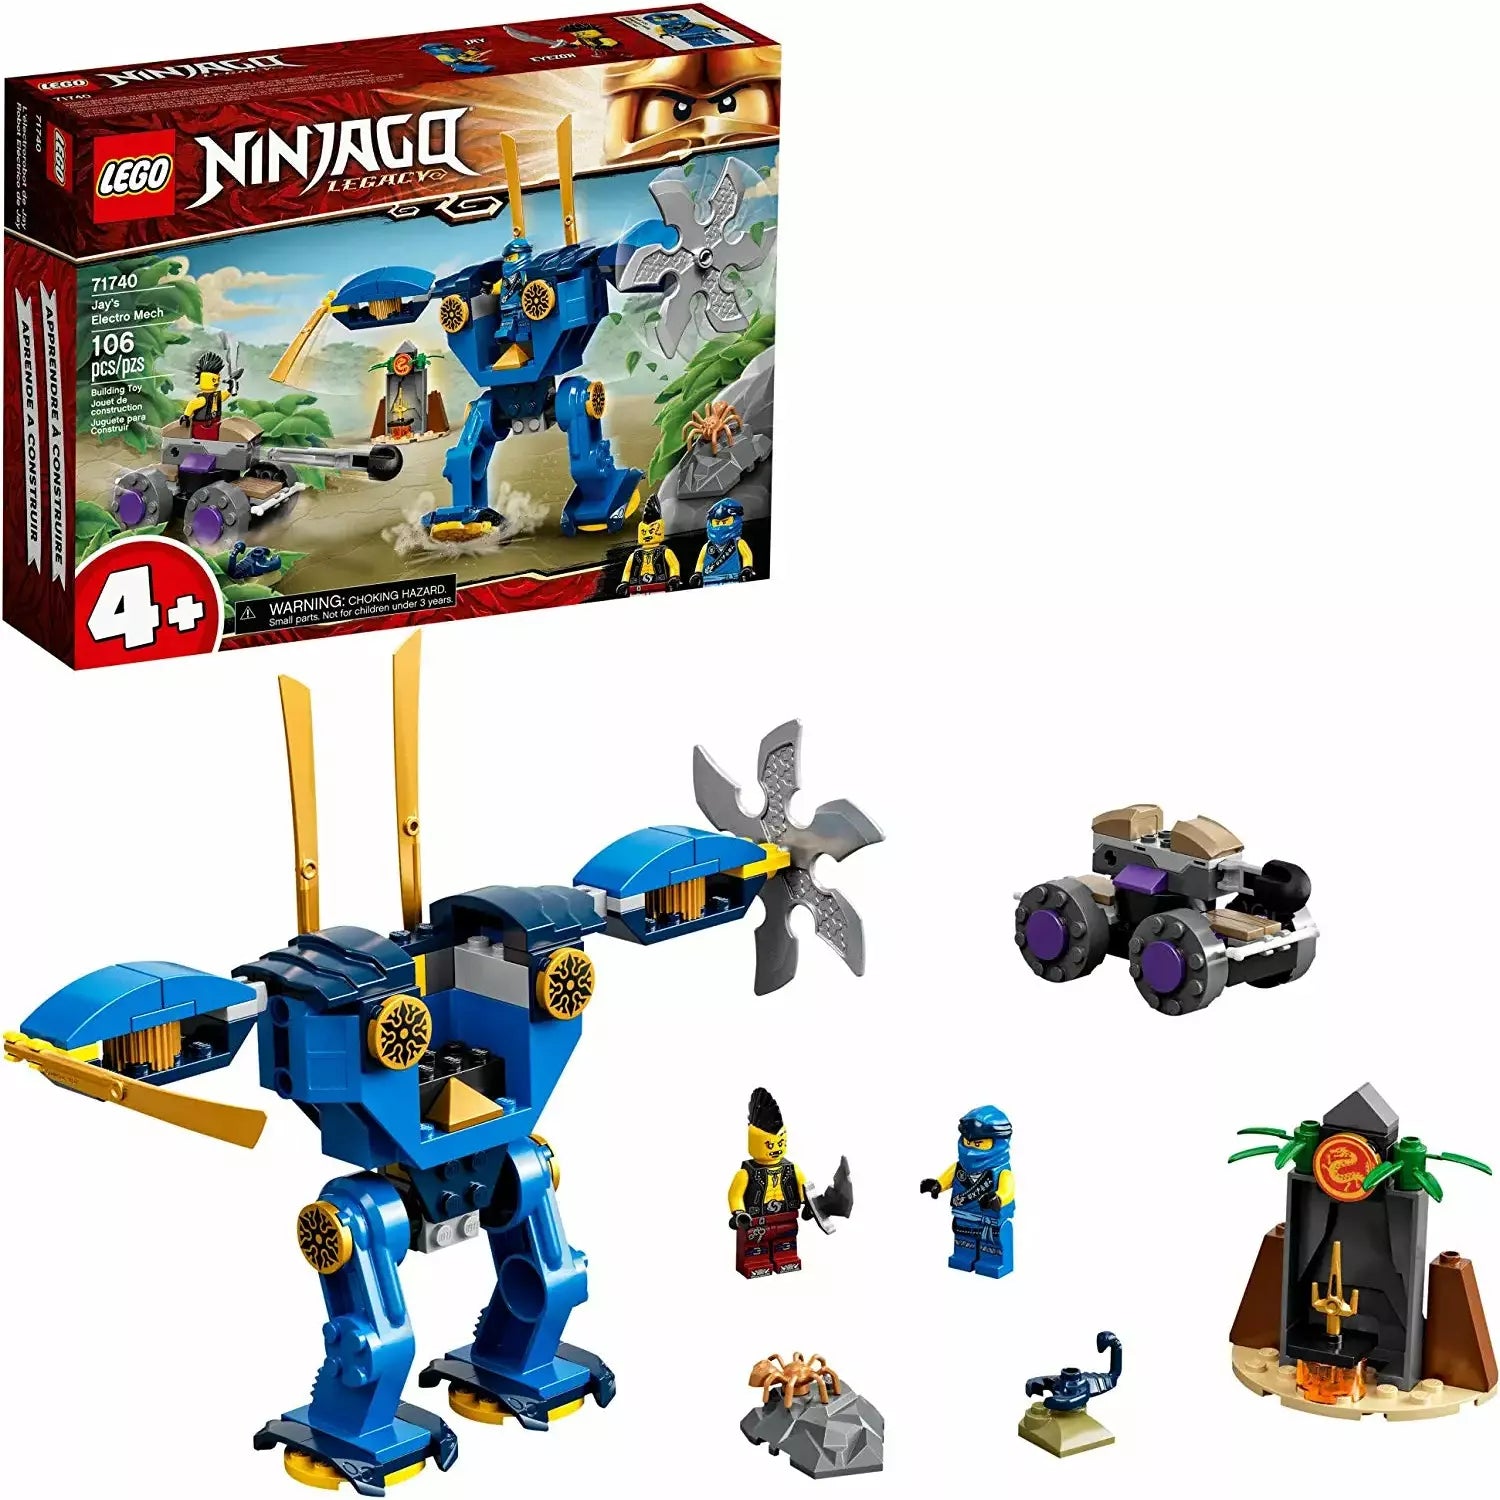 LEGO NINJAGO 71740 Legacy Jay’s Electro Mech Ninja Toy Building Kit Featuring Collectible Minifigures 106 Pieces - BumbleToys - 4+ Years, 5-7 Years, Boys, LEGO, Ninjago, OXE, Pre-Order